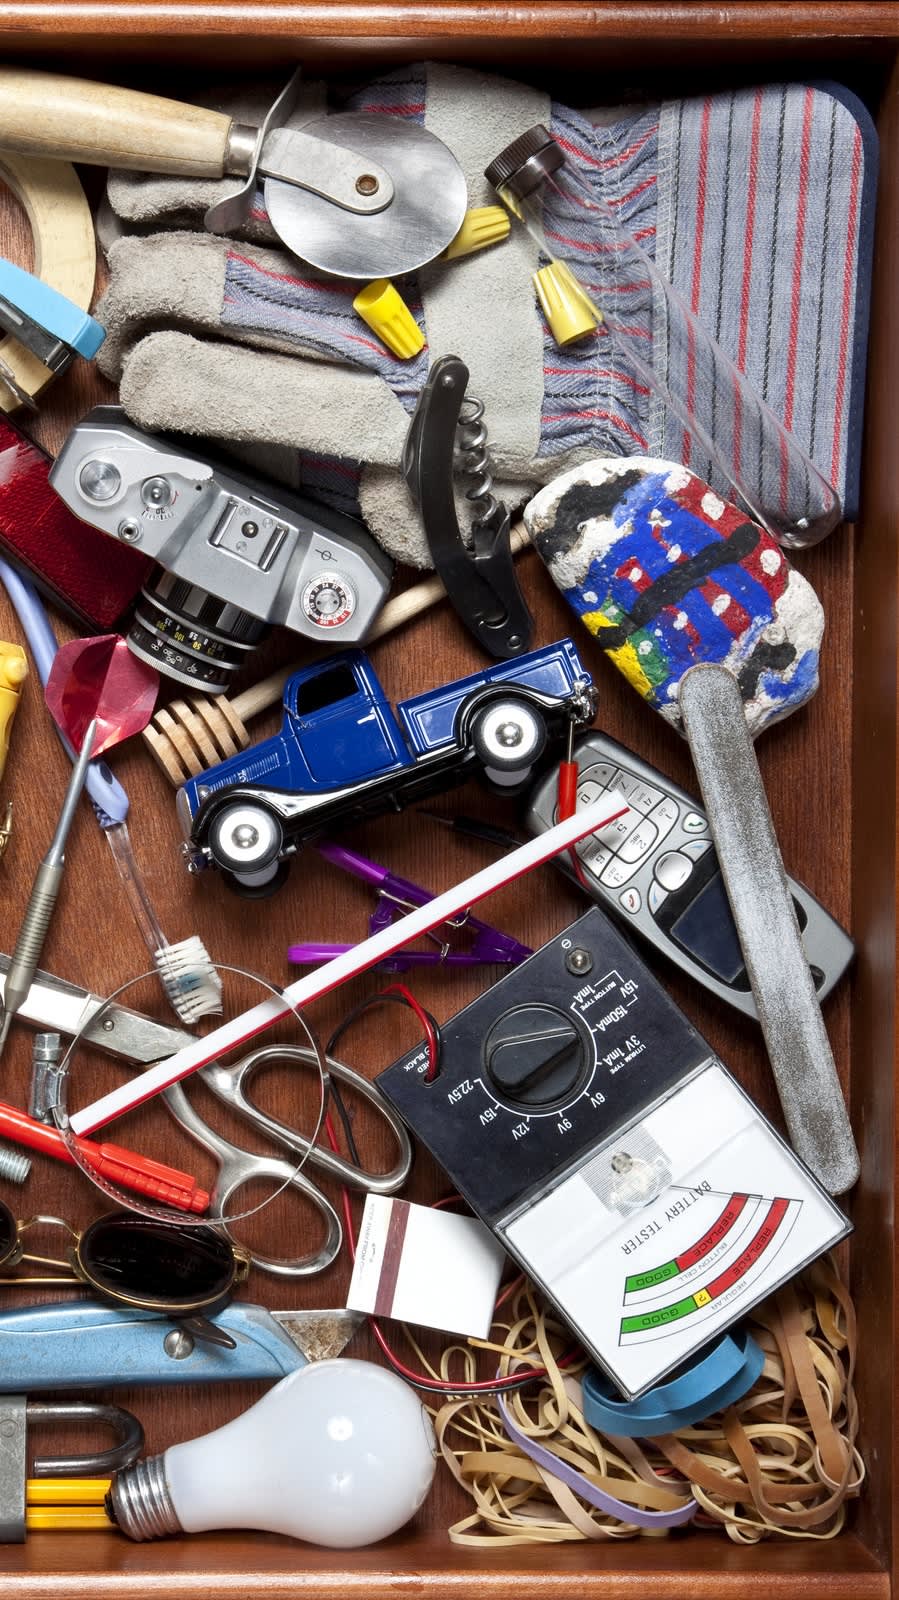 A cluttered junk drawer